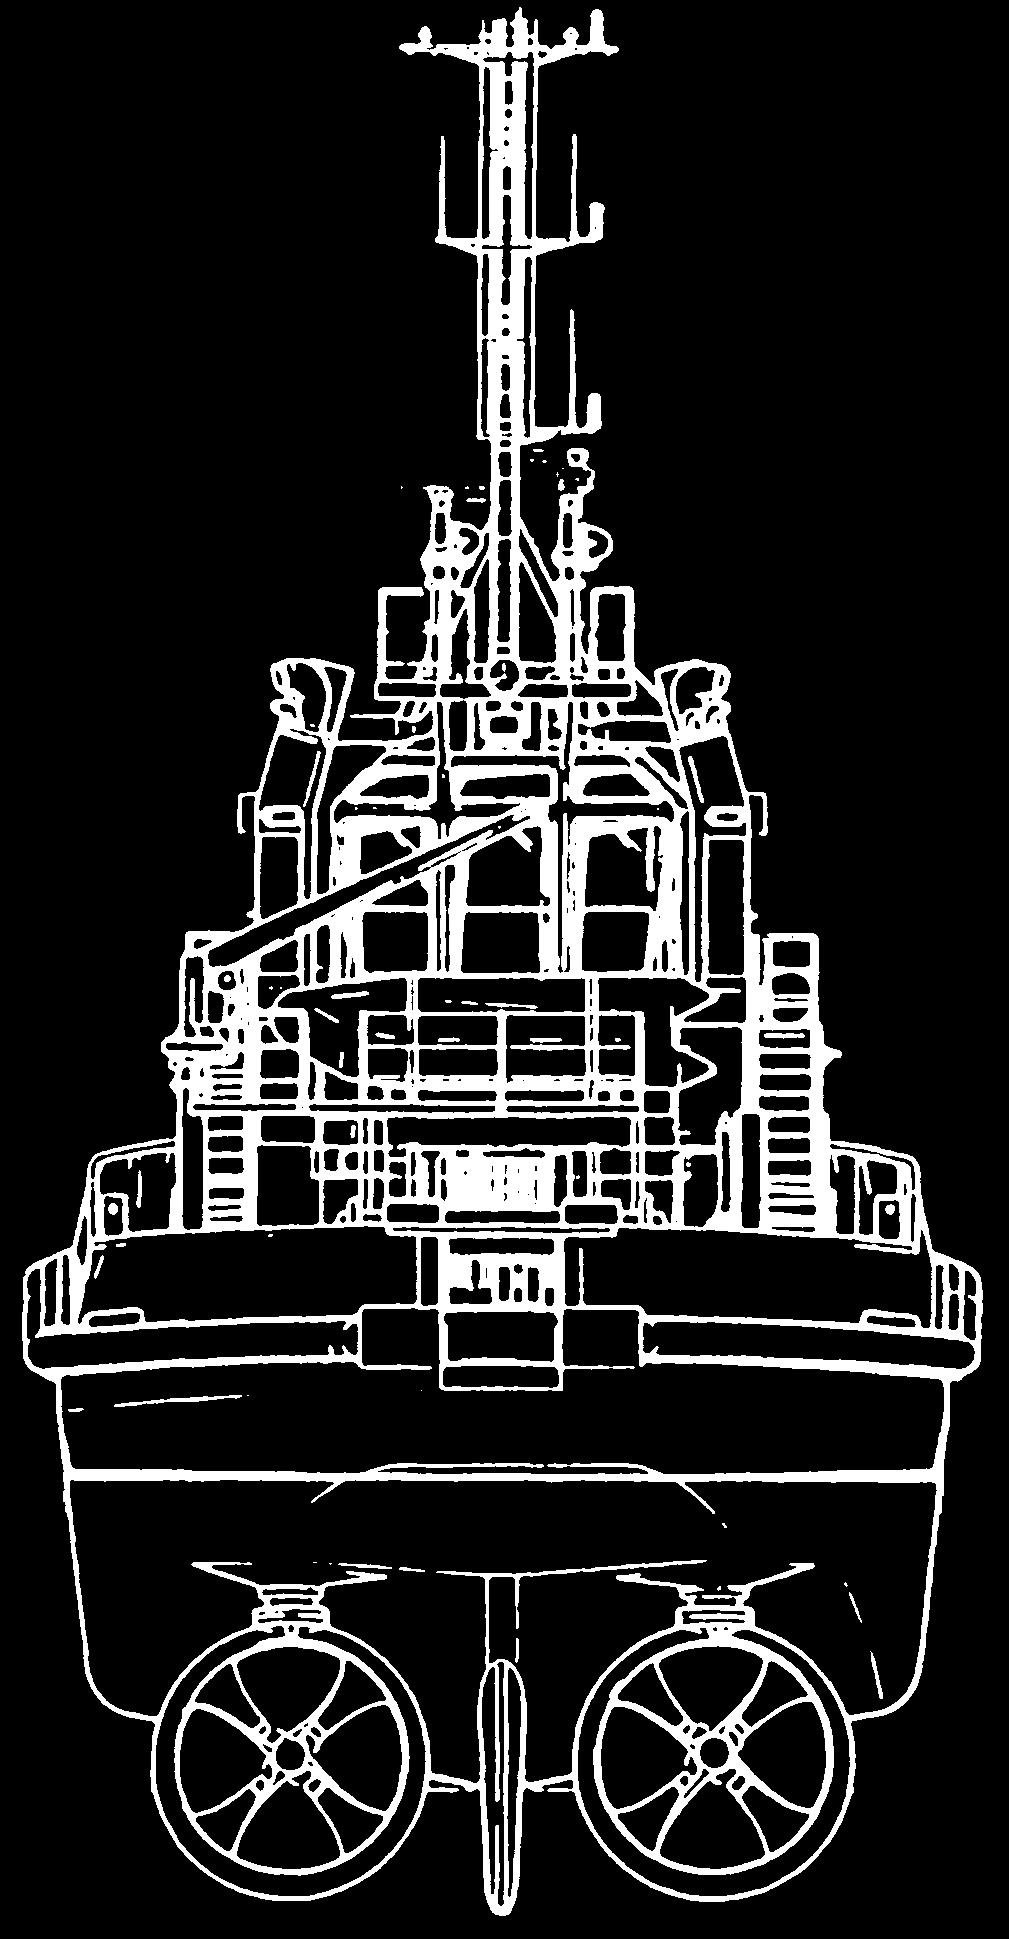 Associates, Canada Logic Vision, The Netherlands Avic Zhenjiang Shipyard Marine Pte Ltd, Singapore Mammoet Salvage BV, The Netherlands Ayles Fernie International Ltd, UK Mampaey Offshore Industries